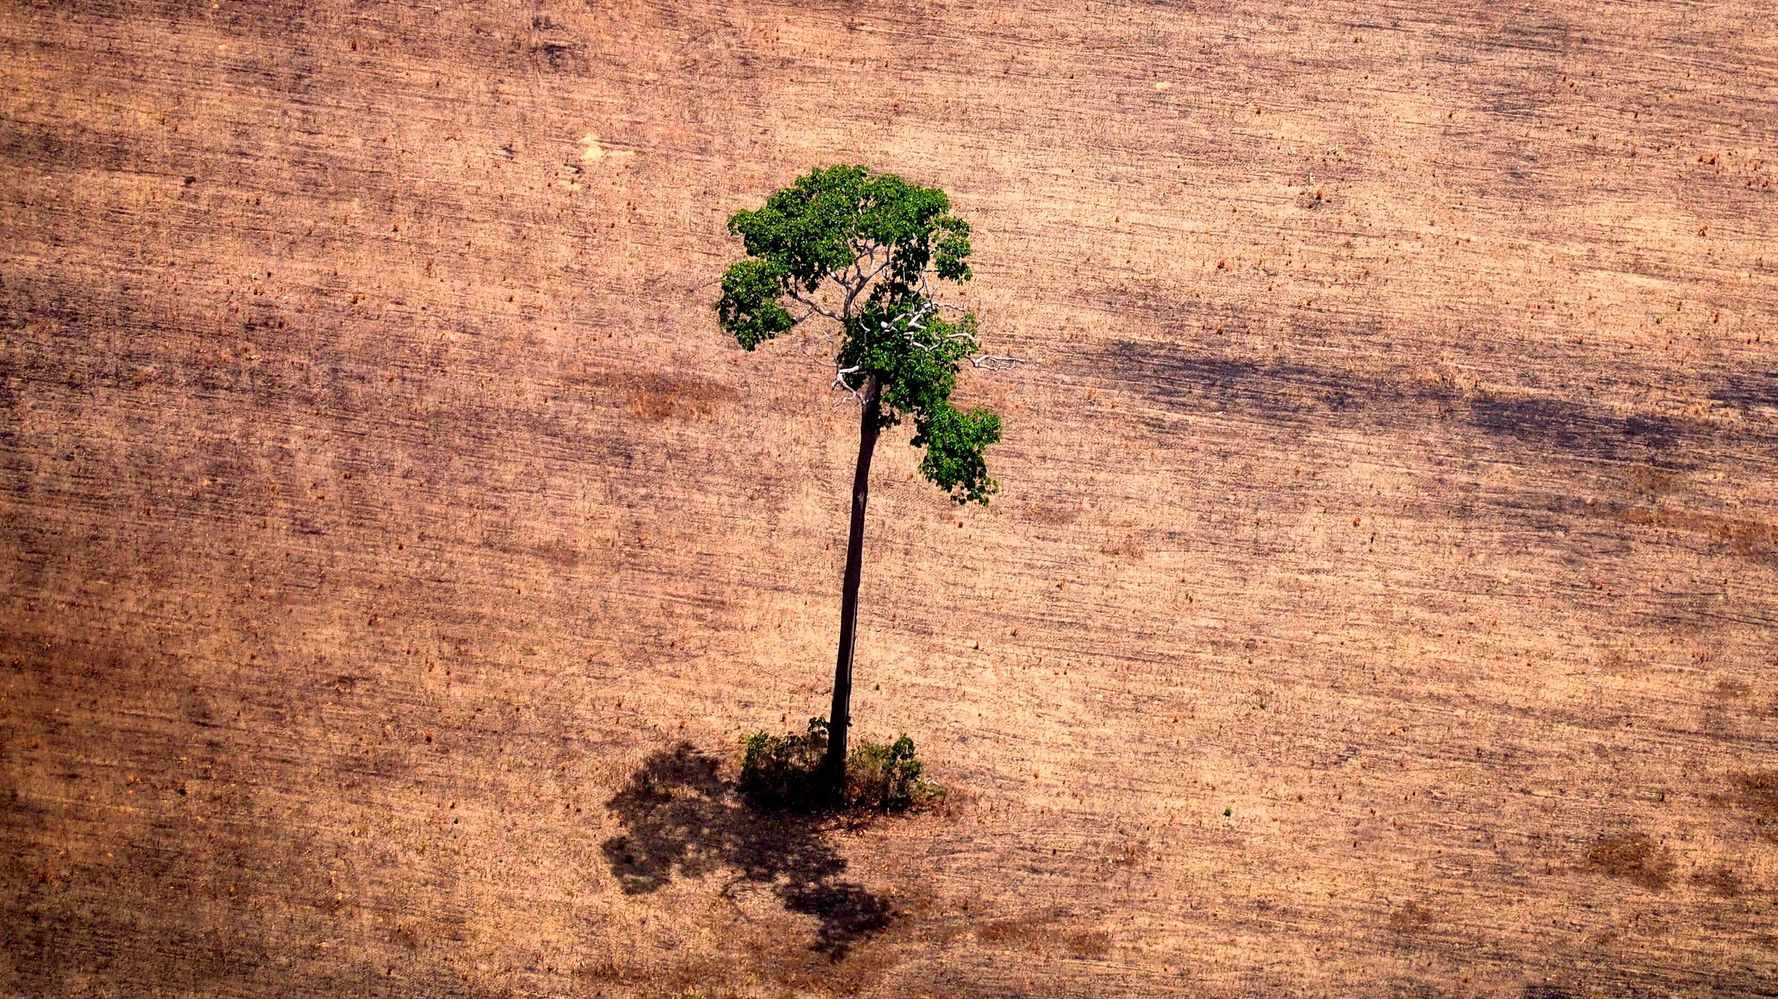 indigenous deforestation report recognize land